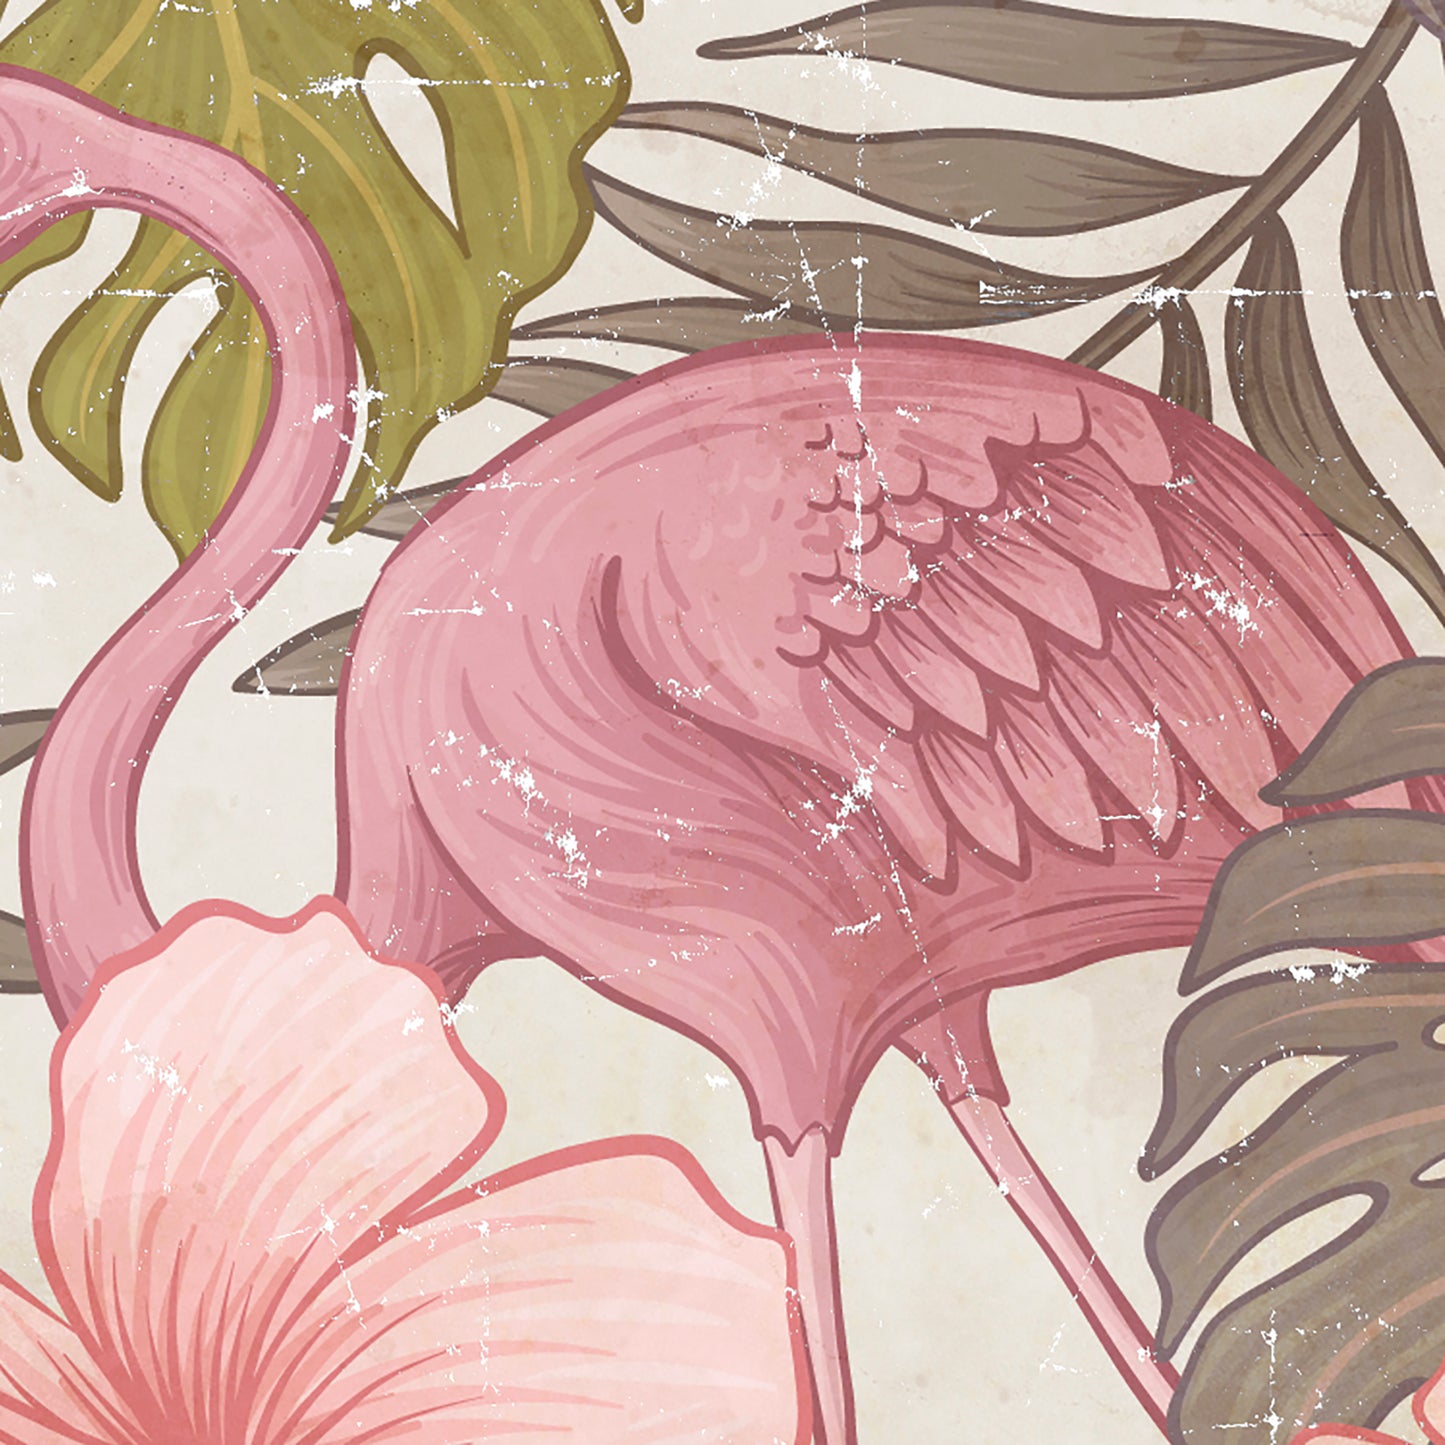 Hibiscus & Pink Flamingo on Papier froissé (Wrinkled paper)